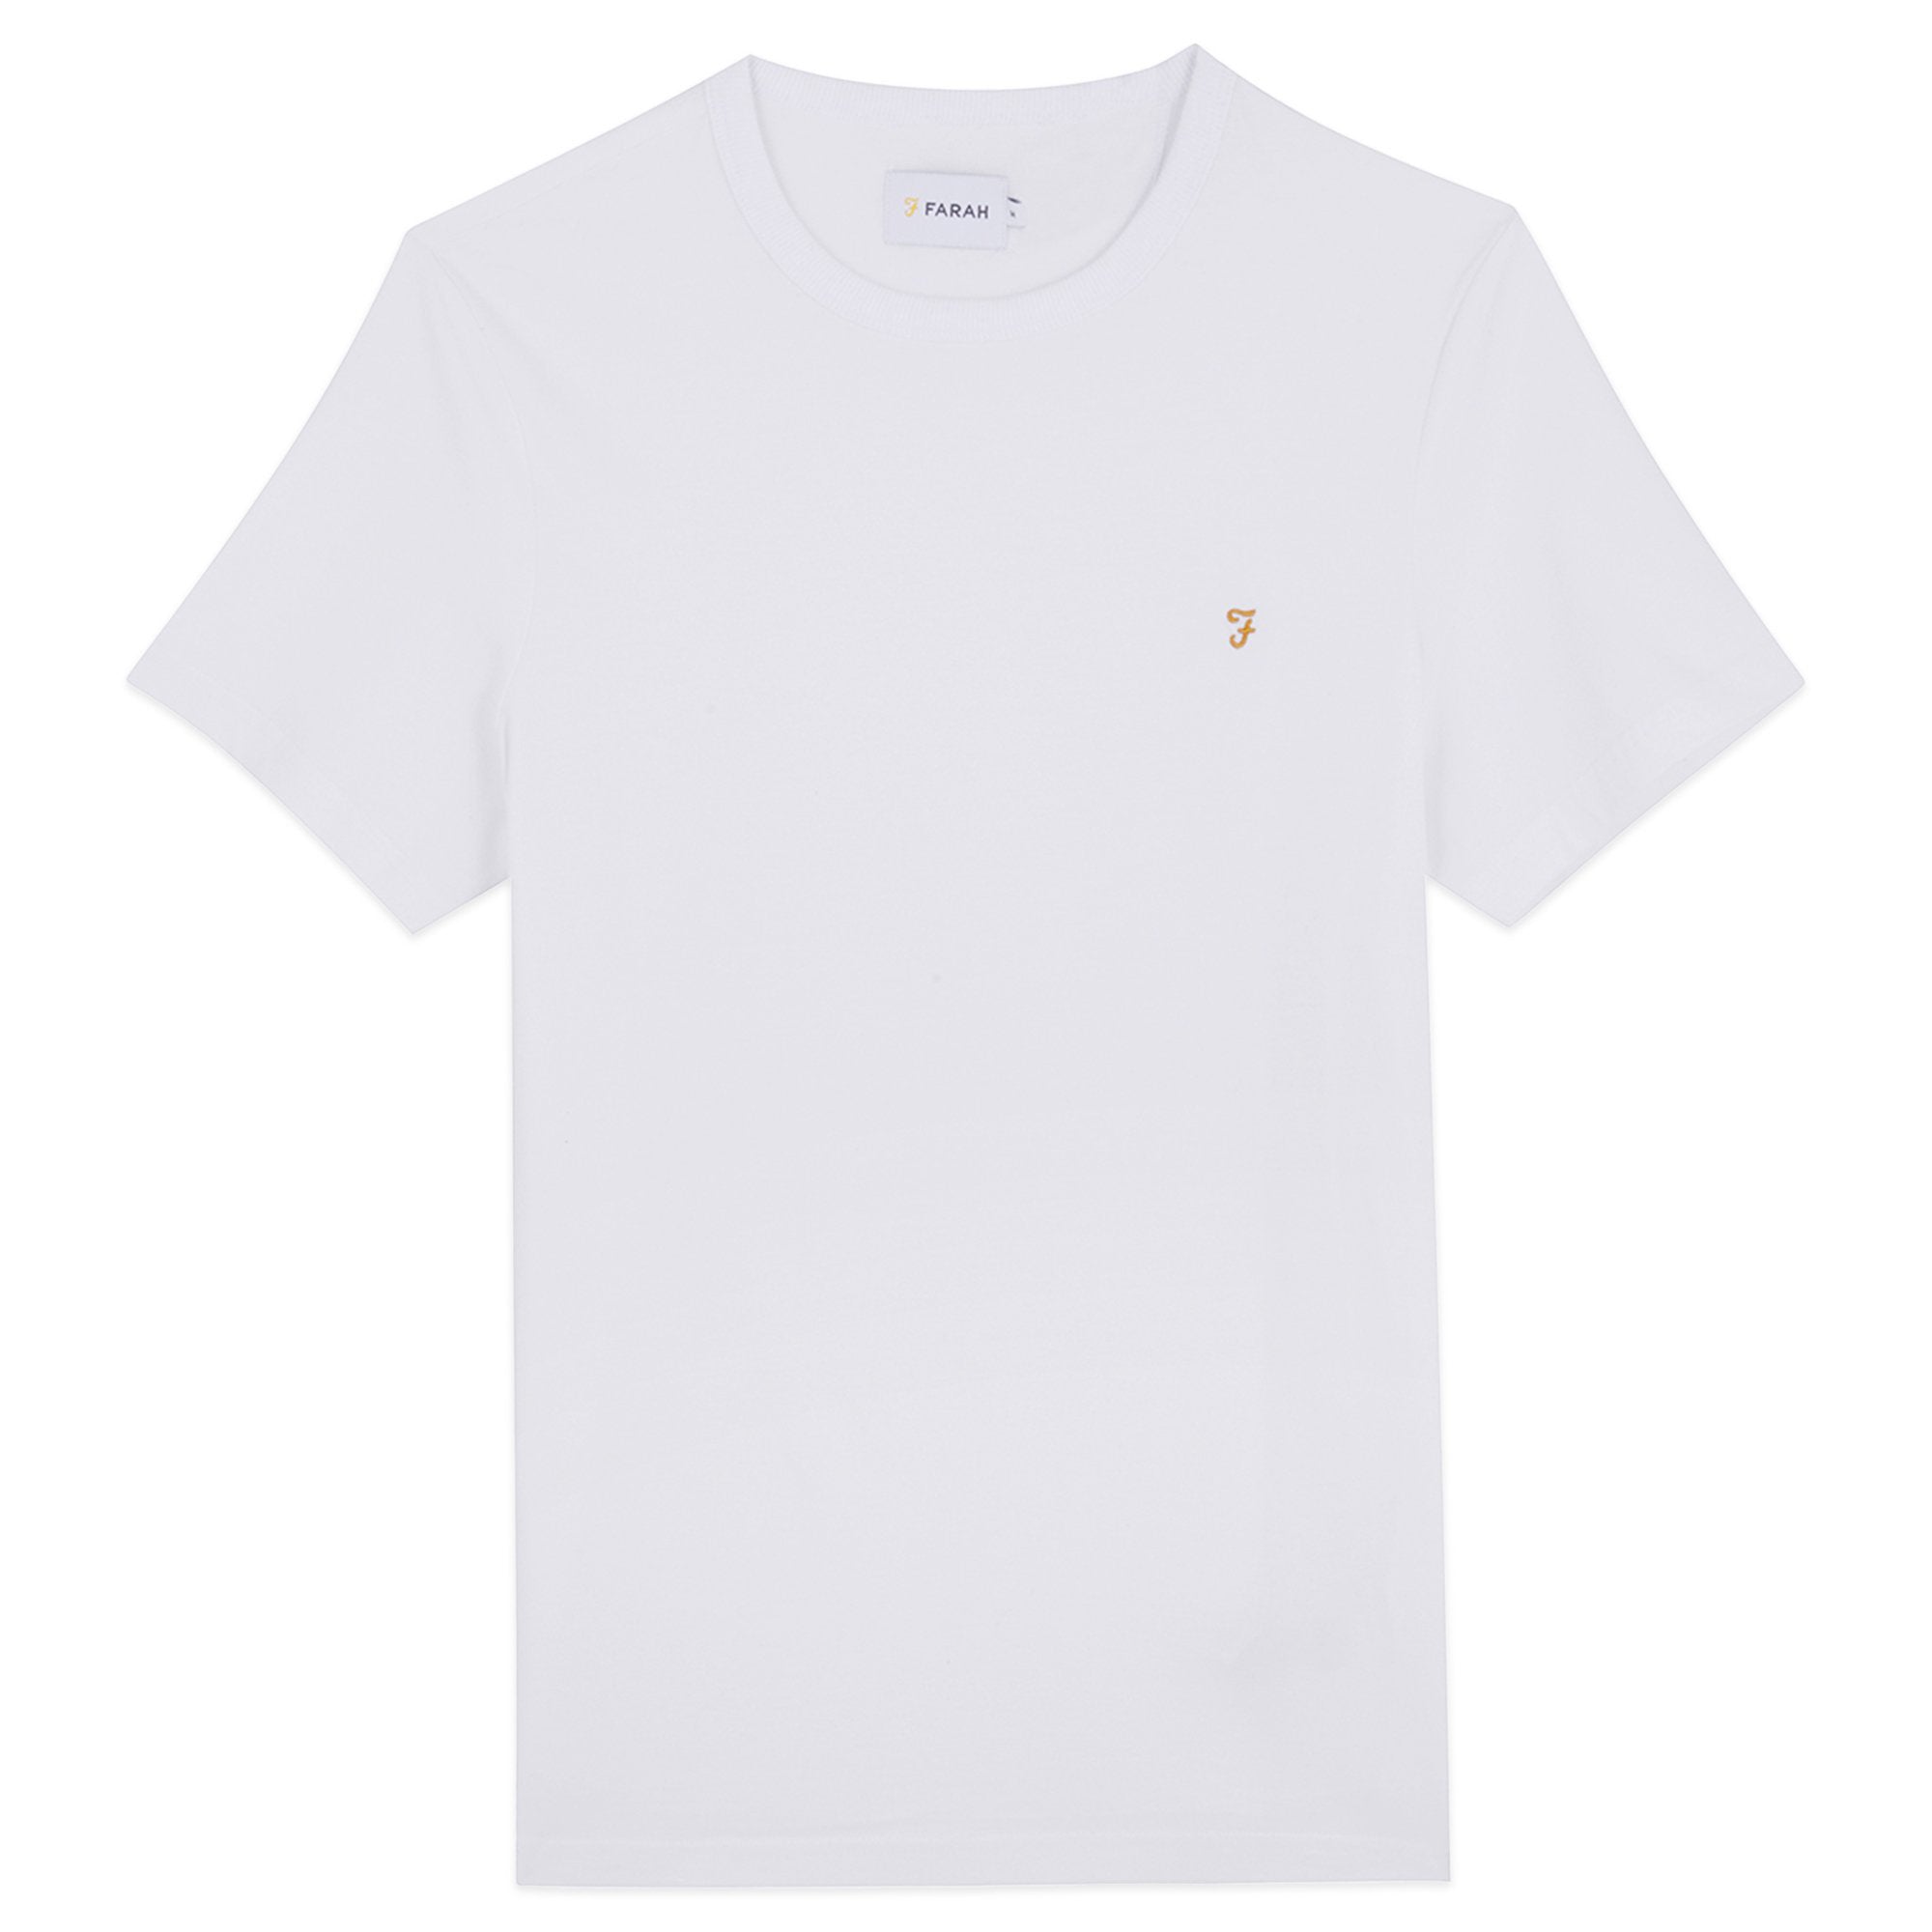 Farah New Danny T-Shirt - White